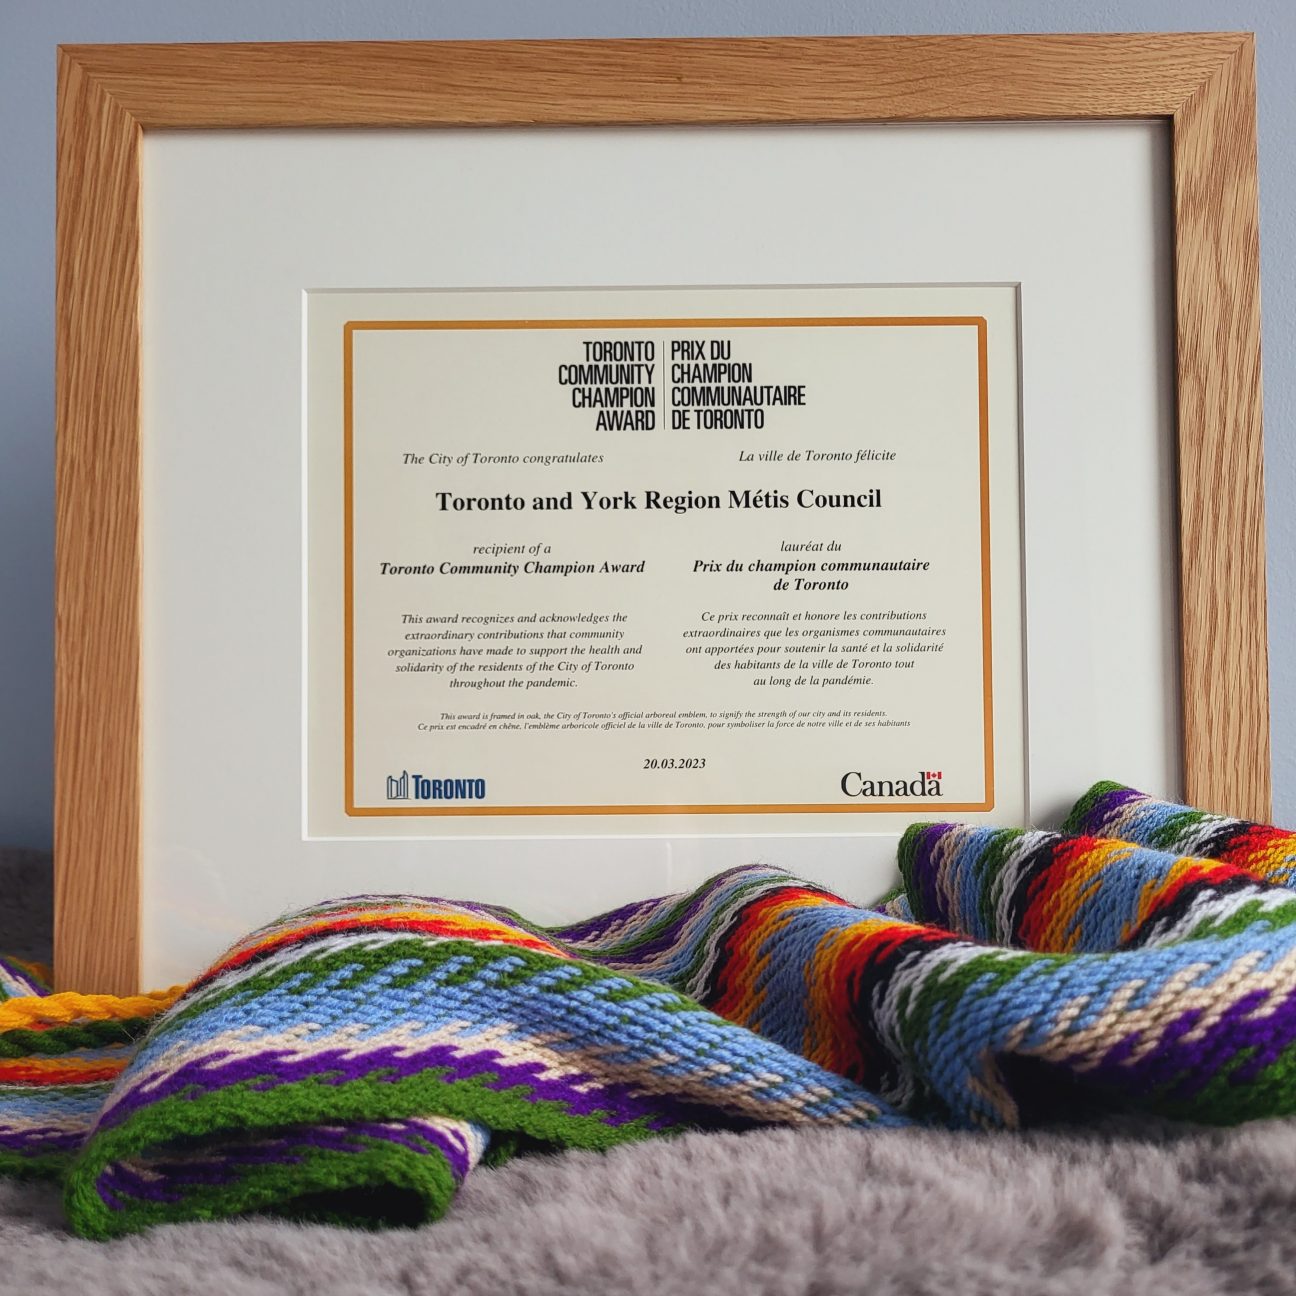 Image of framed Toronto Community Champion Award